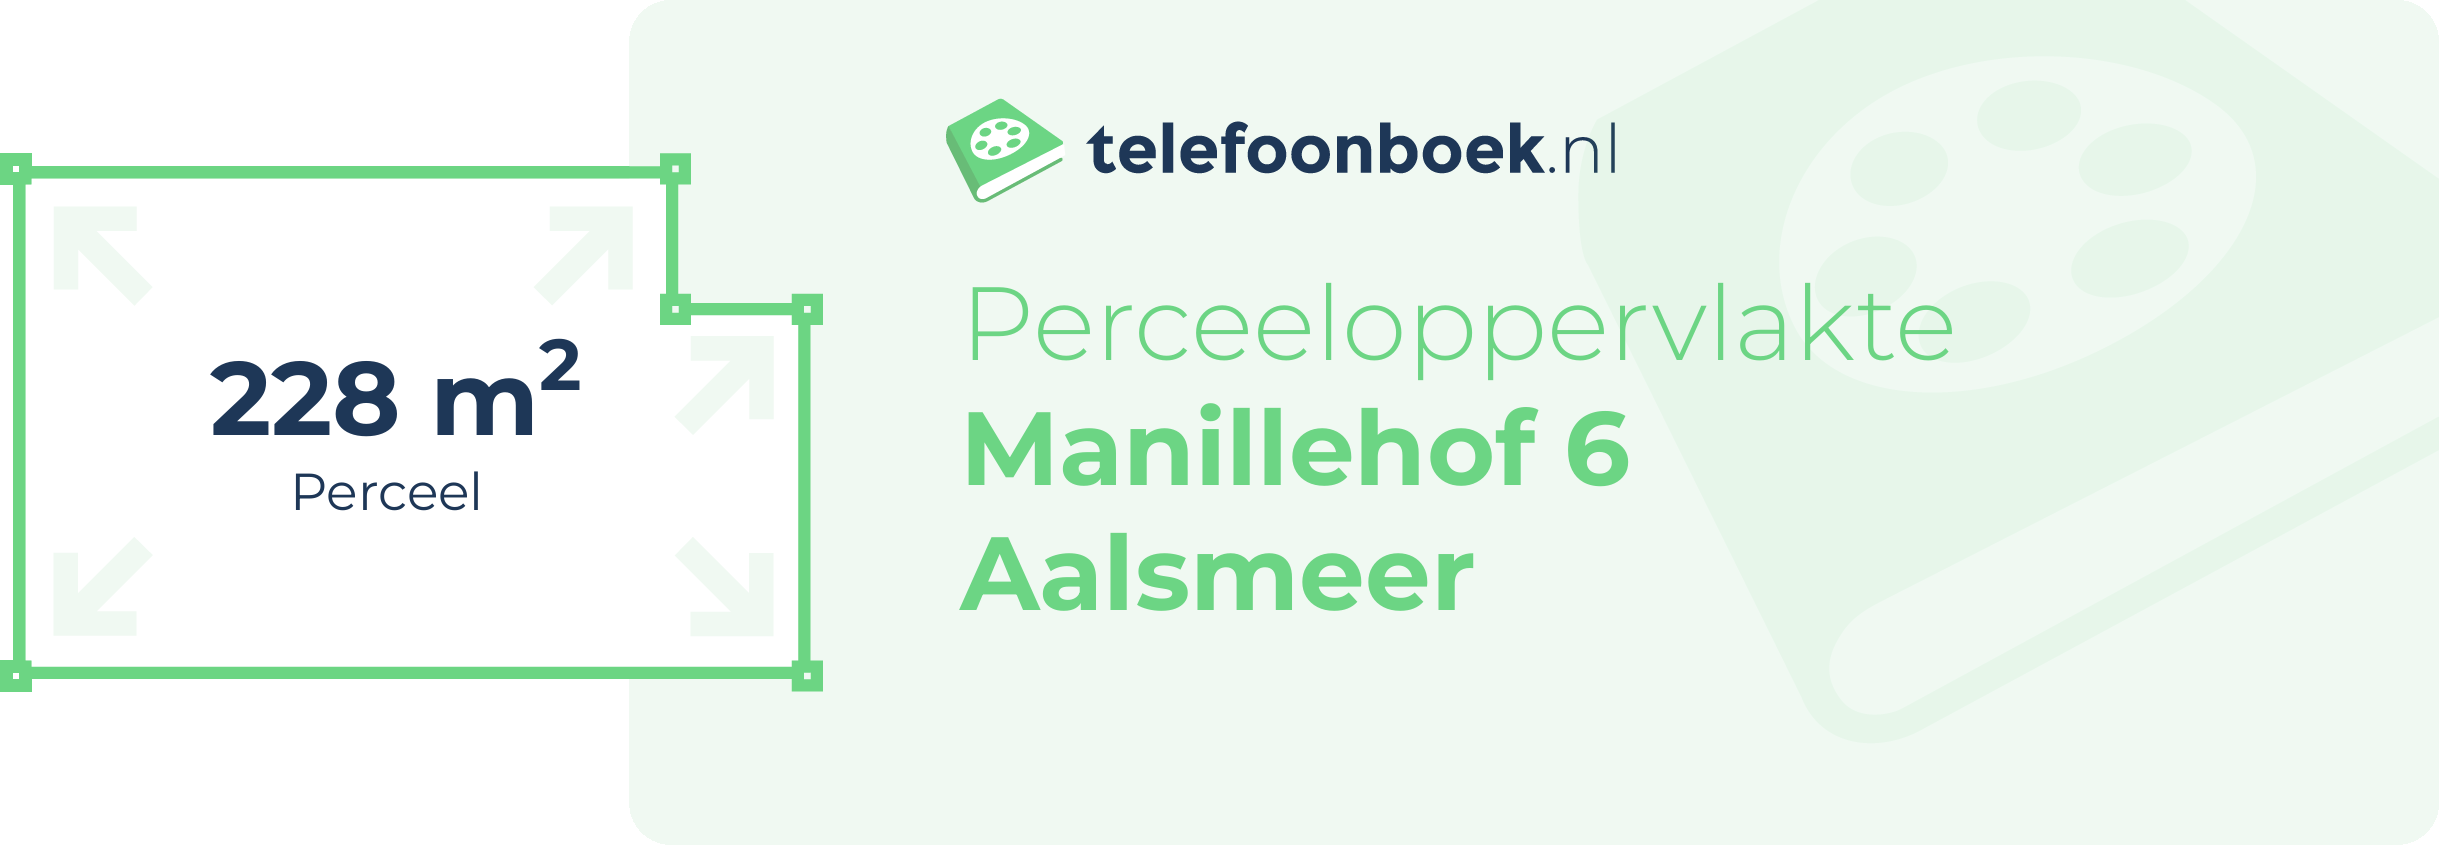 Perceeloppervlakte Manillehof 6 Aalsmeer